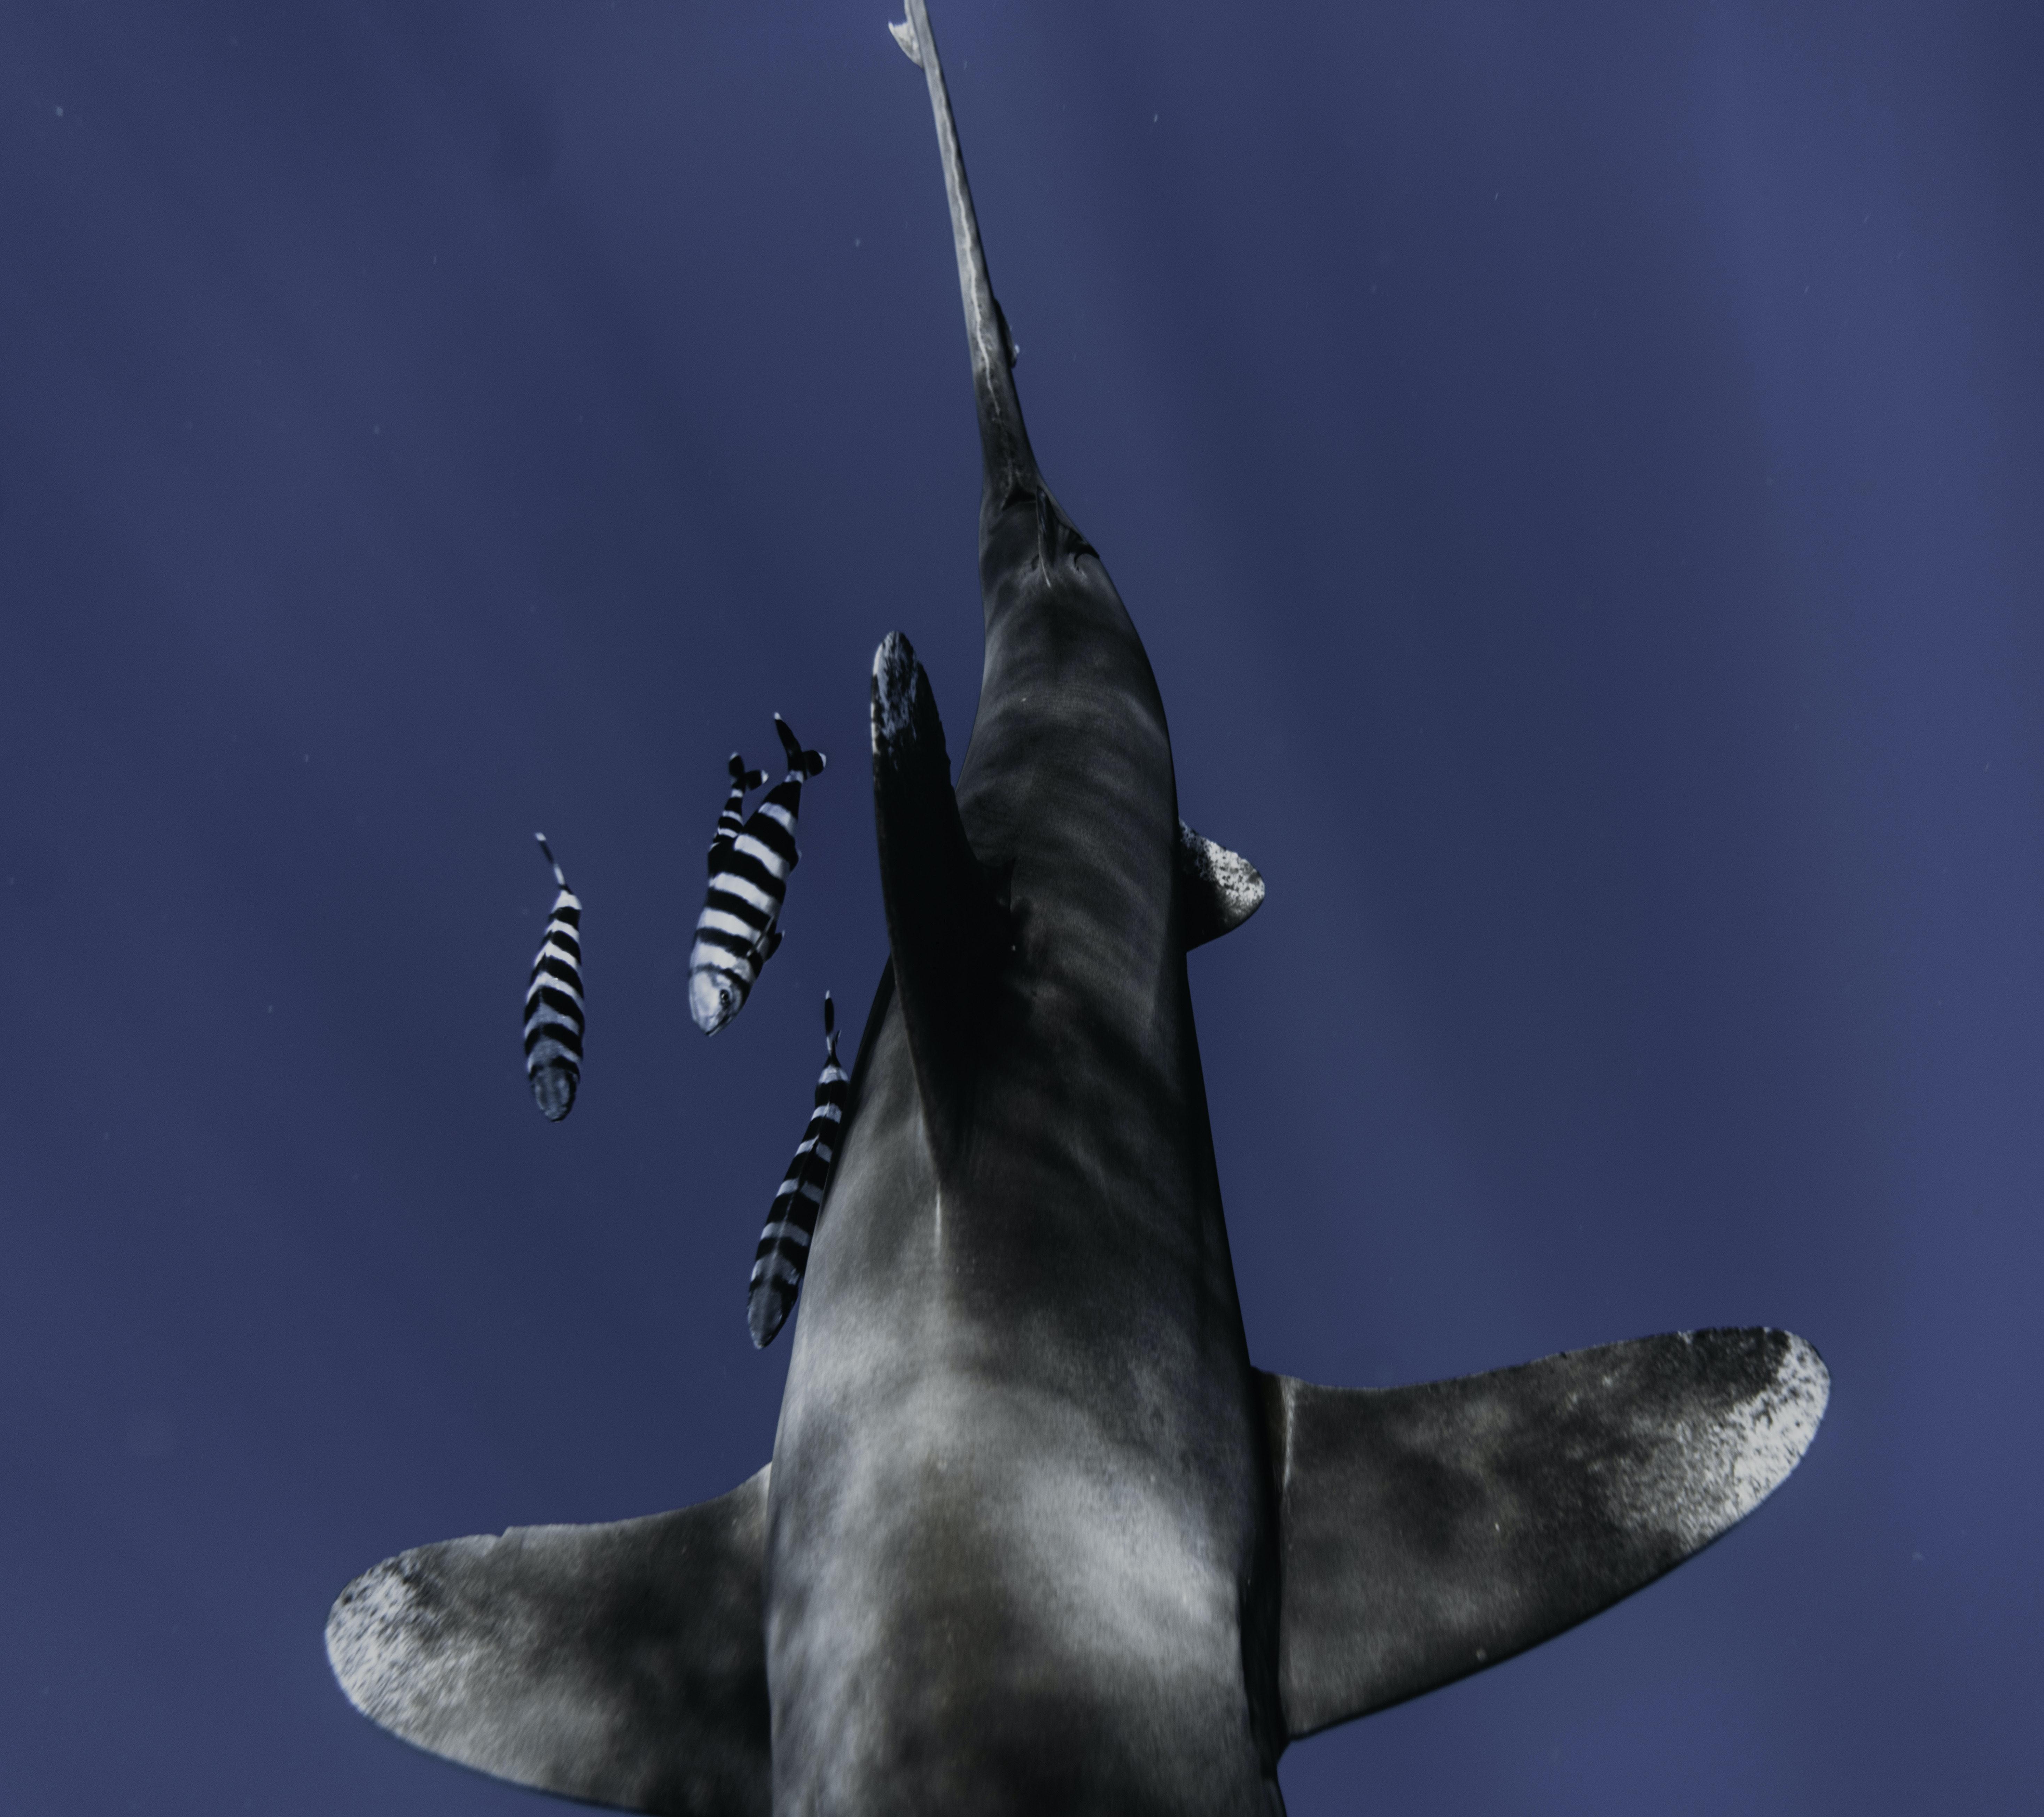 shark vertebrae identification